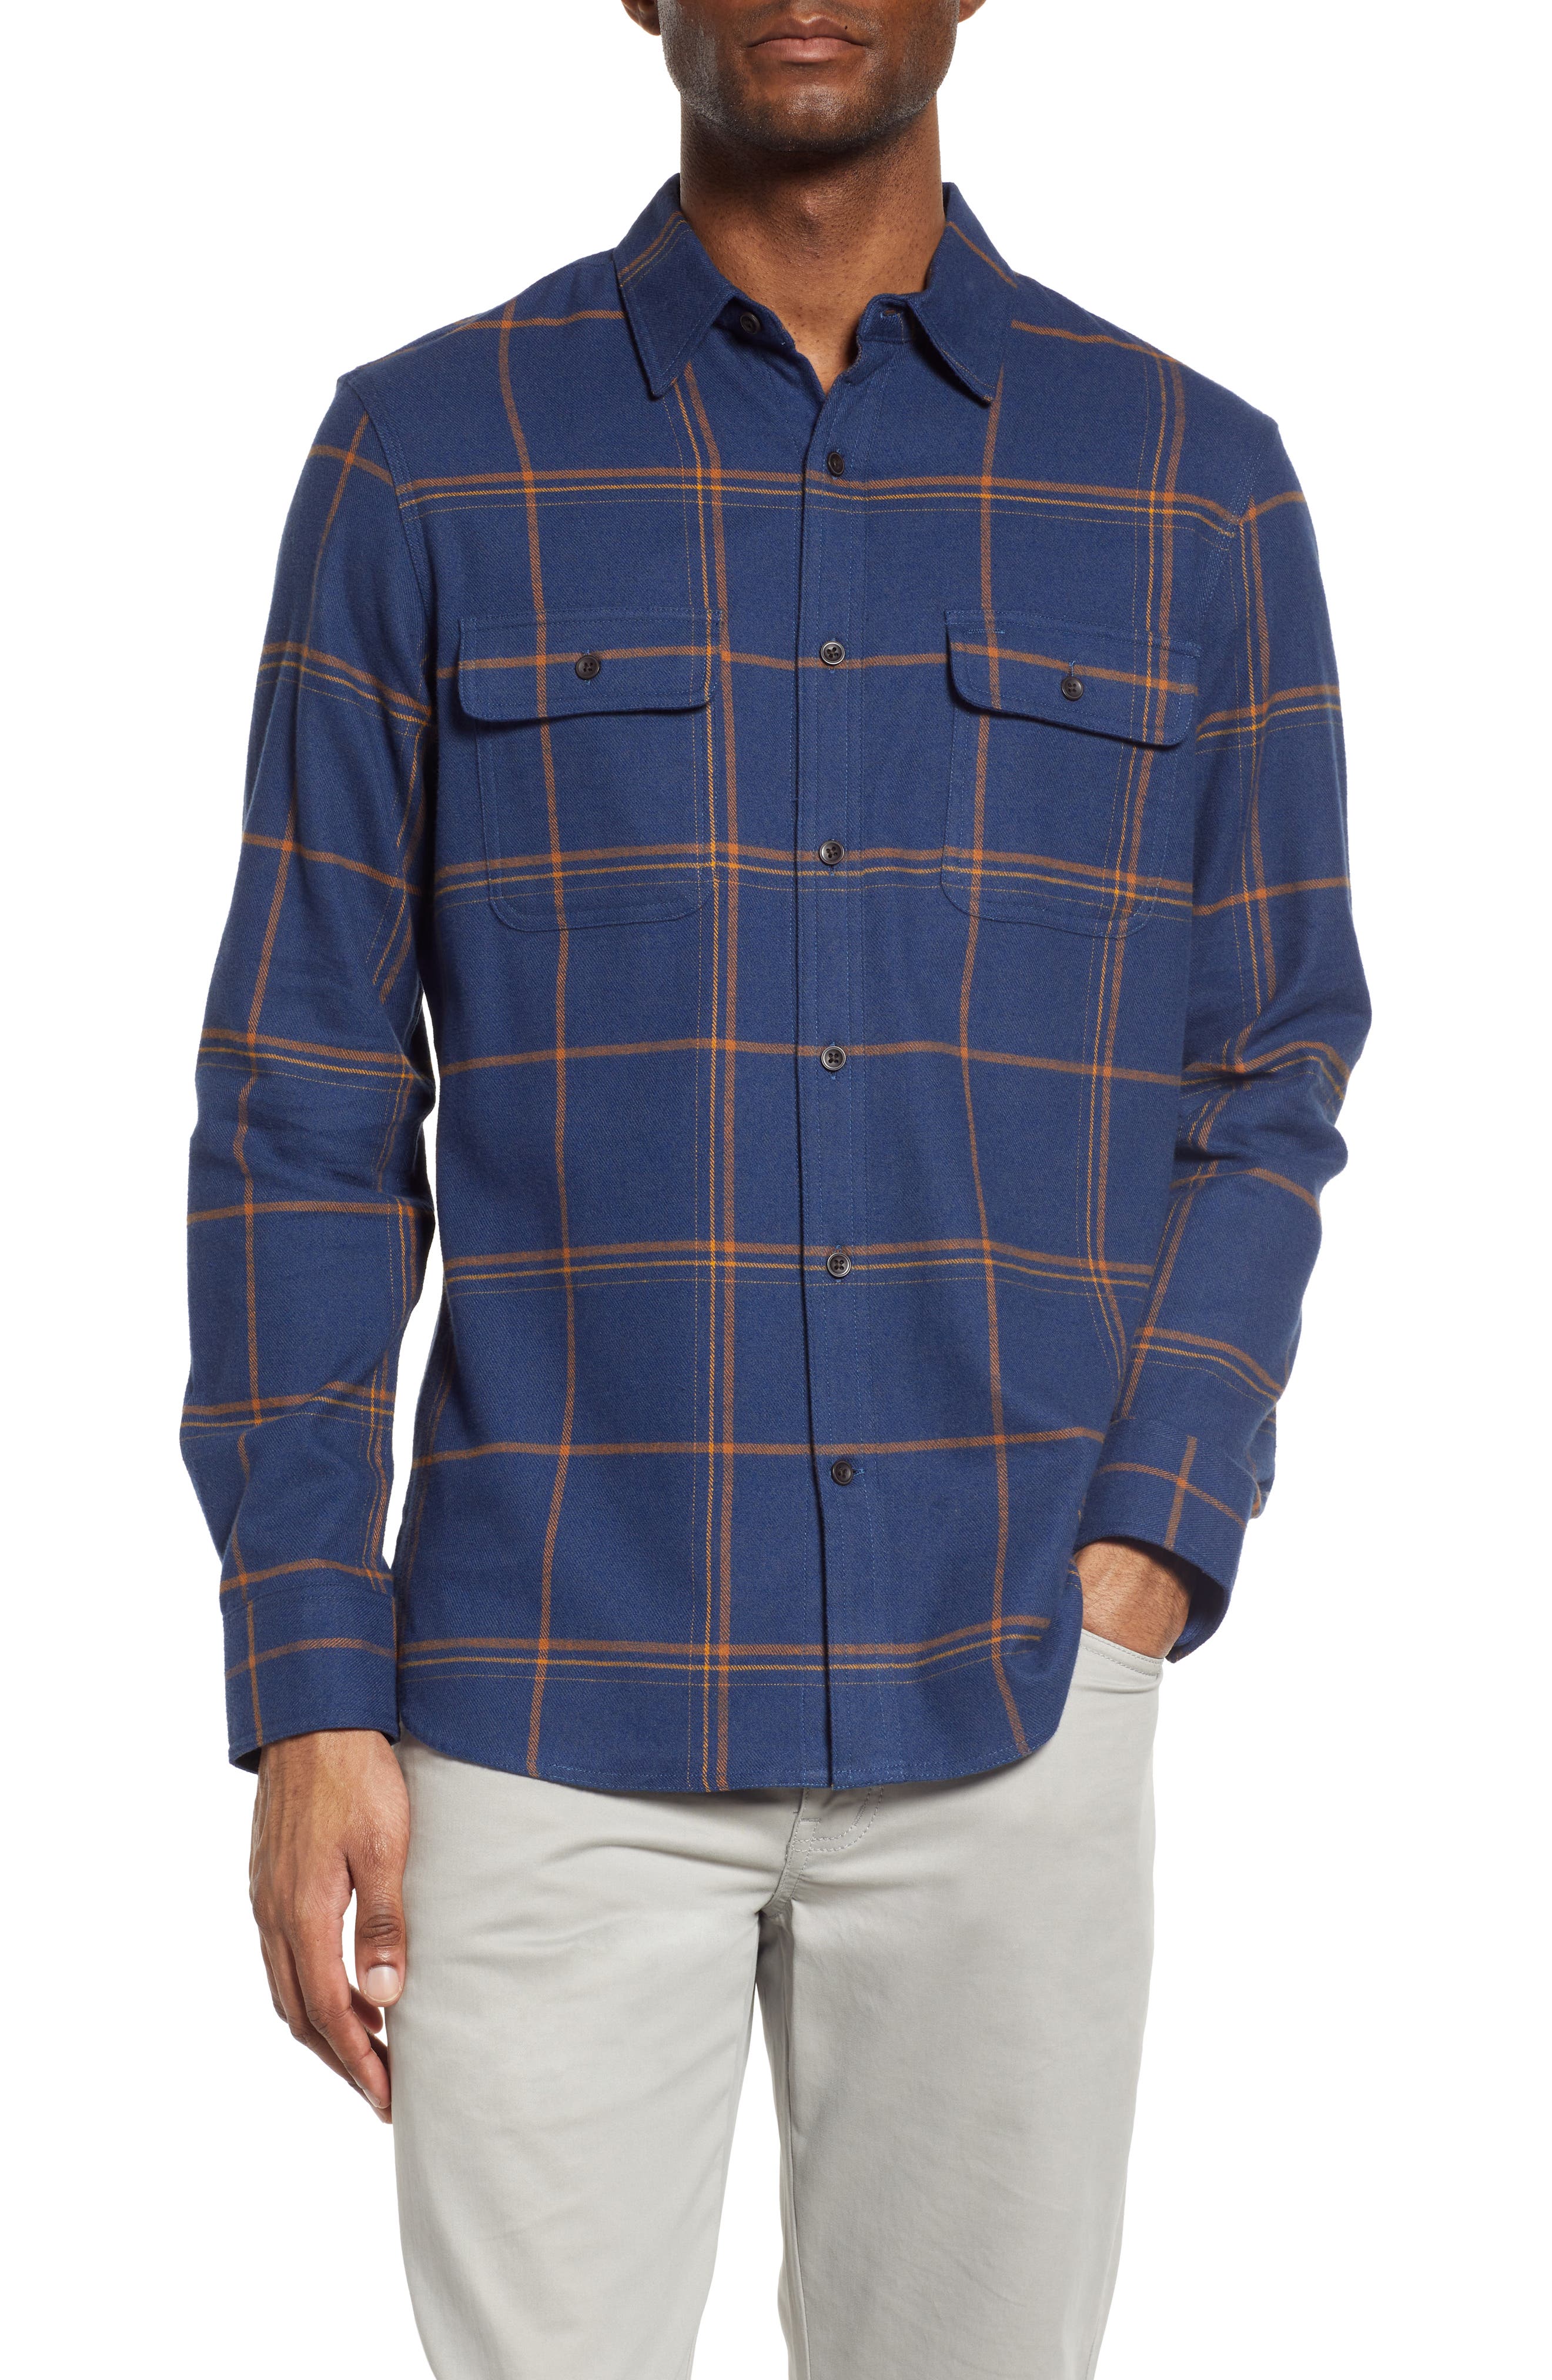 Fashion Formal Shirts Long Sleeve Shirts Yves Saint Laurent Long Sleeve Shirt turquoise-blue striped pattern wet-look 